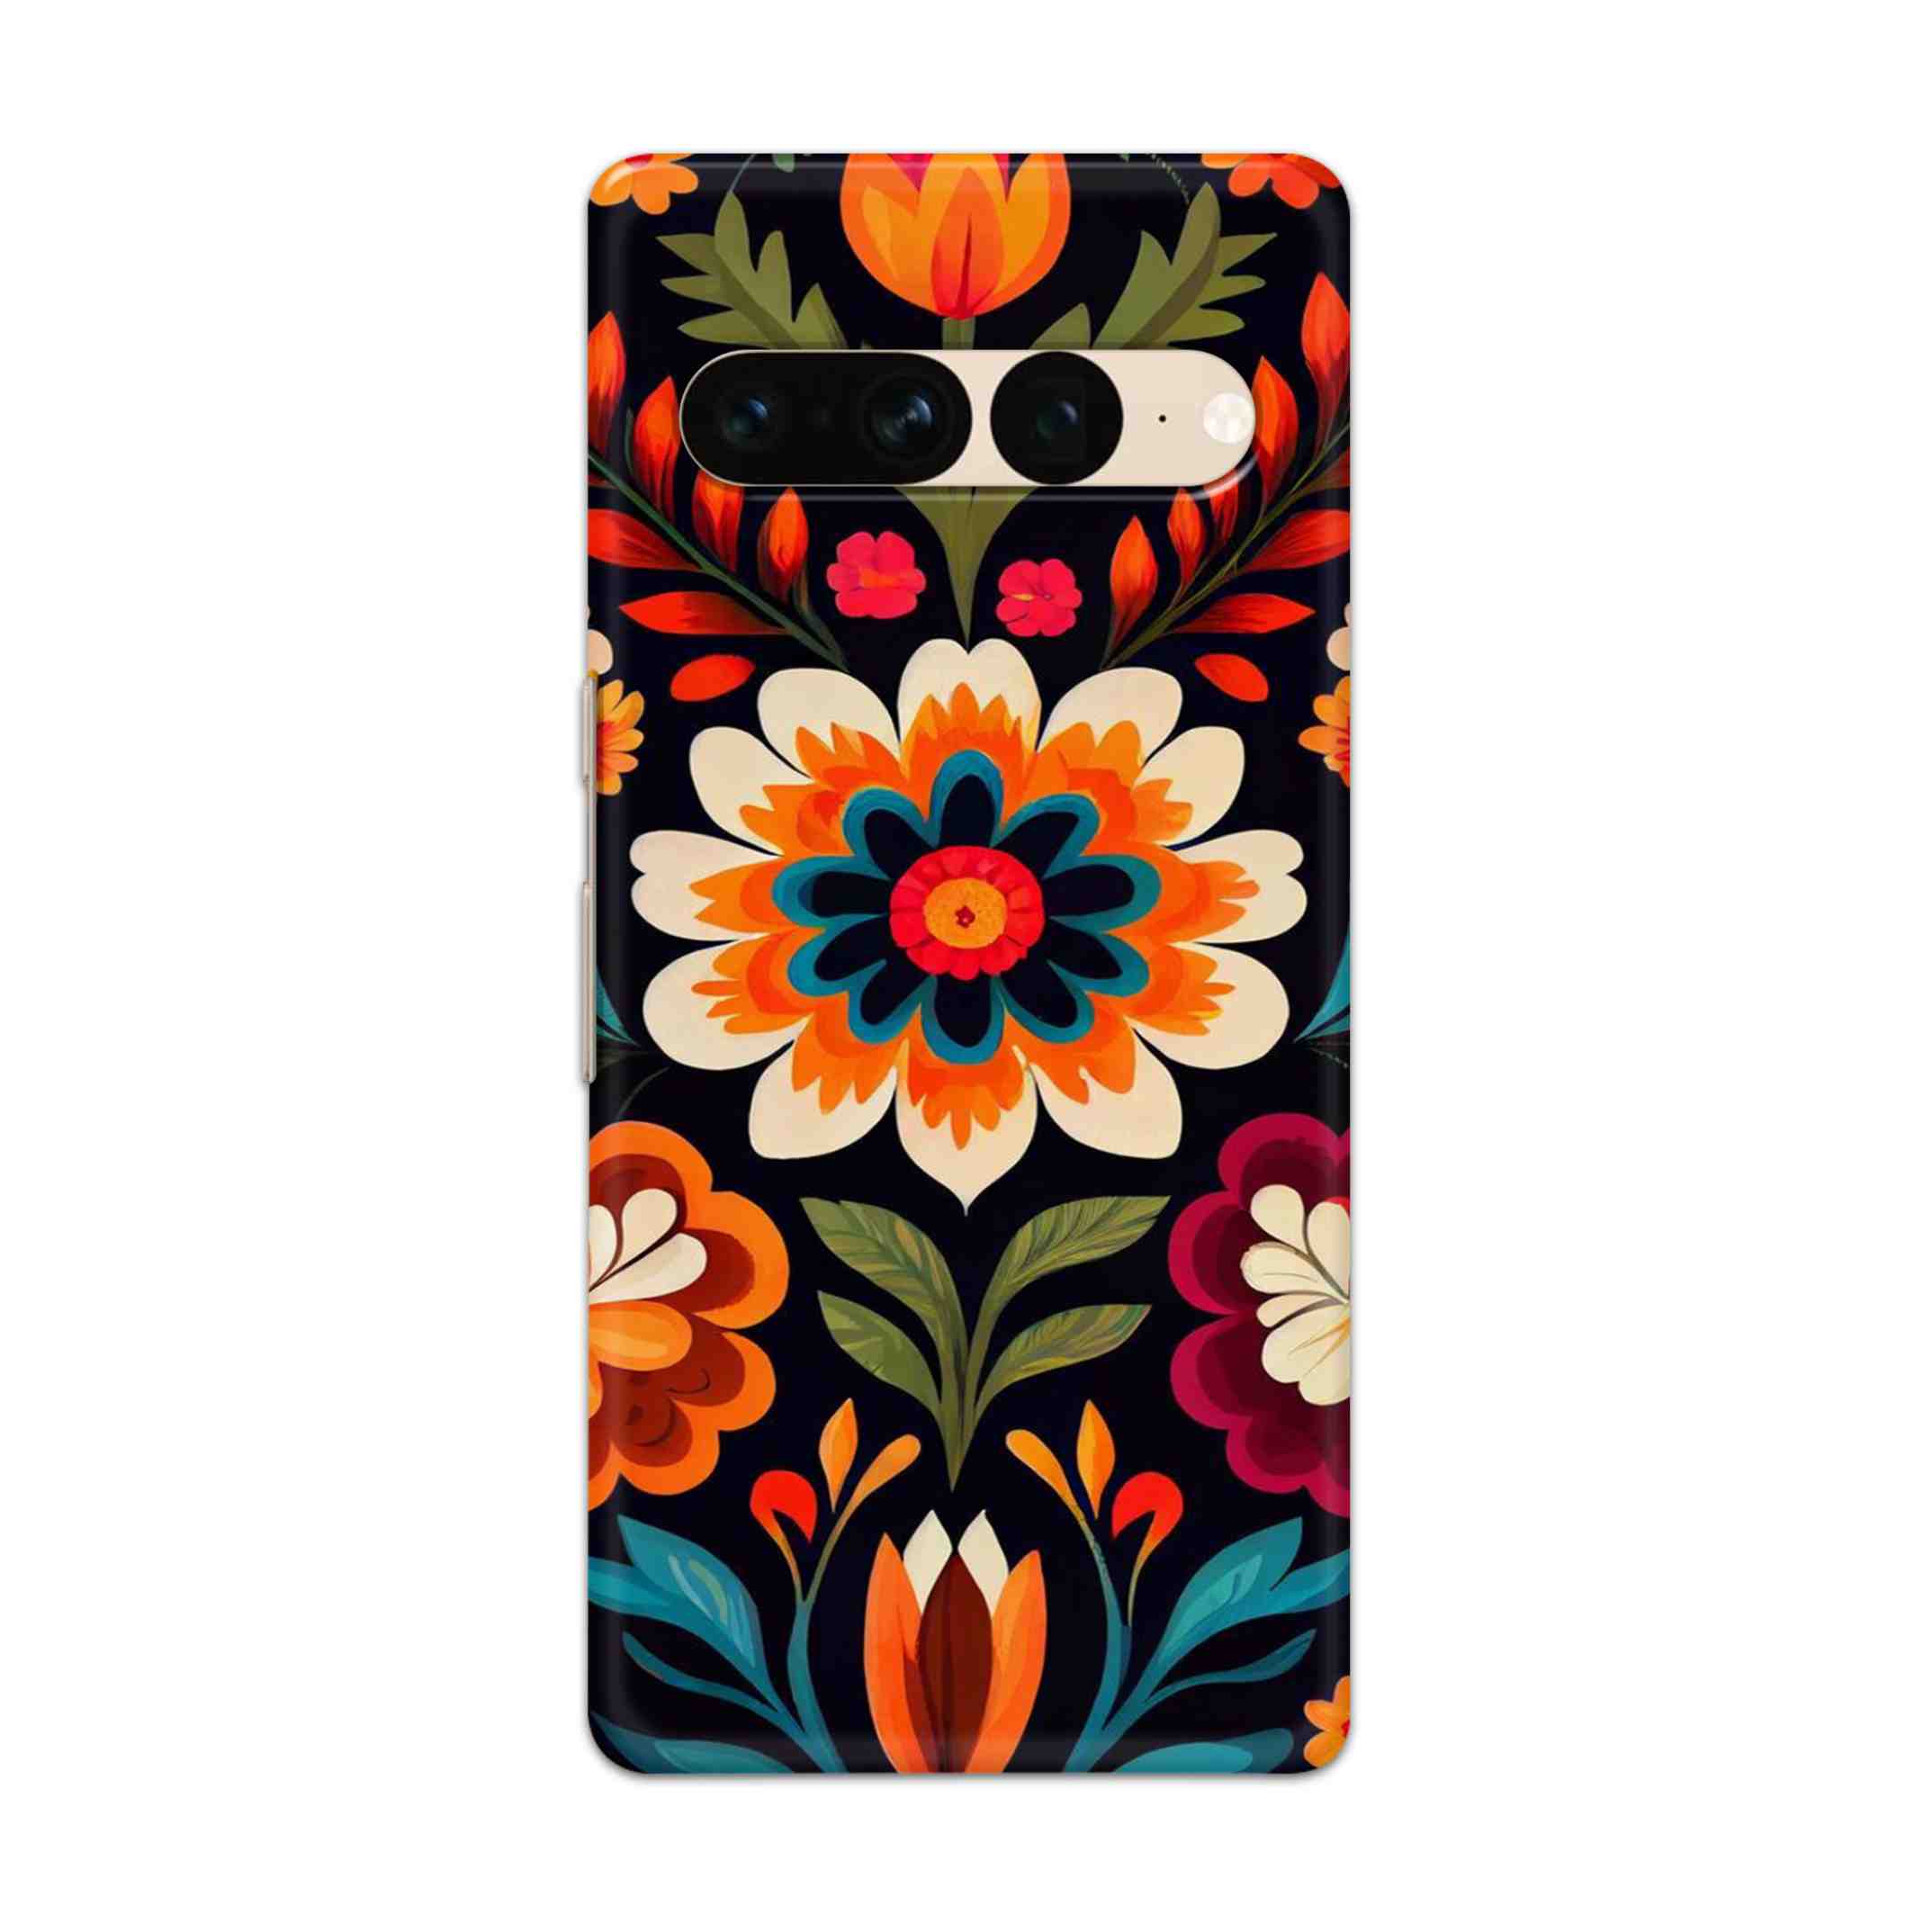 Buy Flower Hard Back Mobile Phone Case Cover For Google Pixel 7 Pro Online